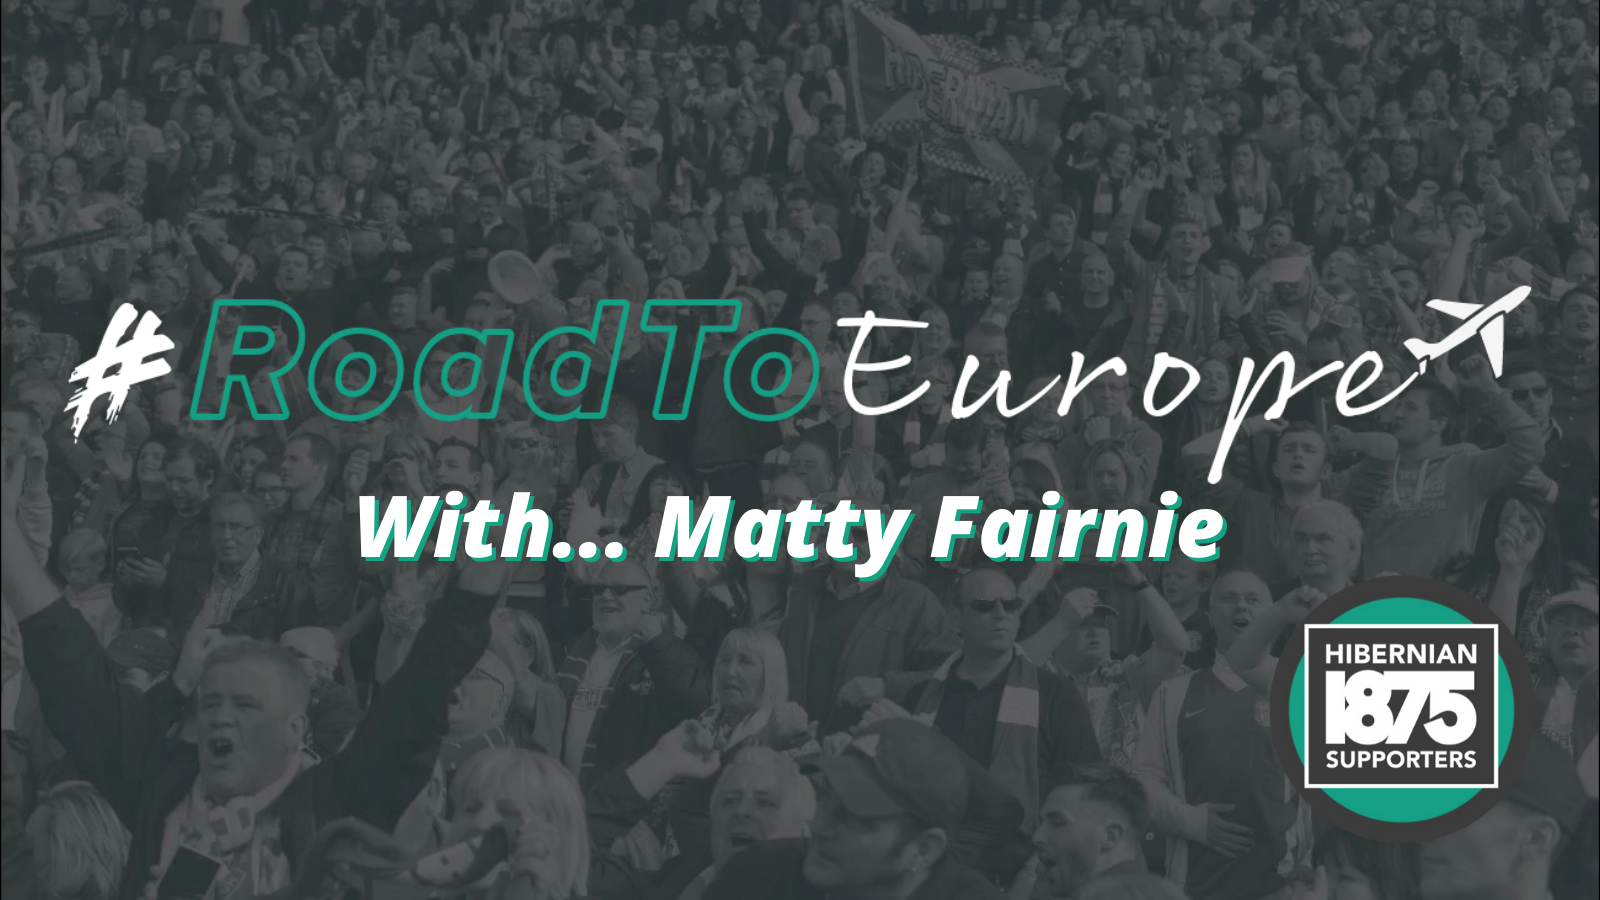 #RoadToEurope With Matty Fairnie